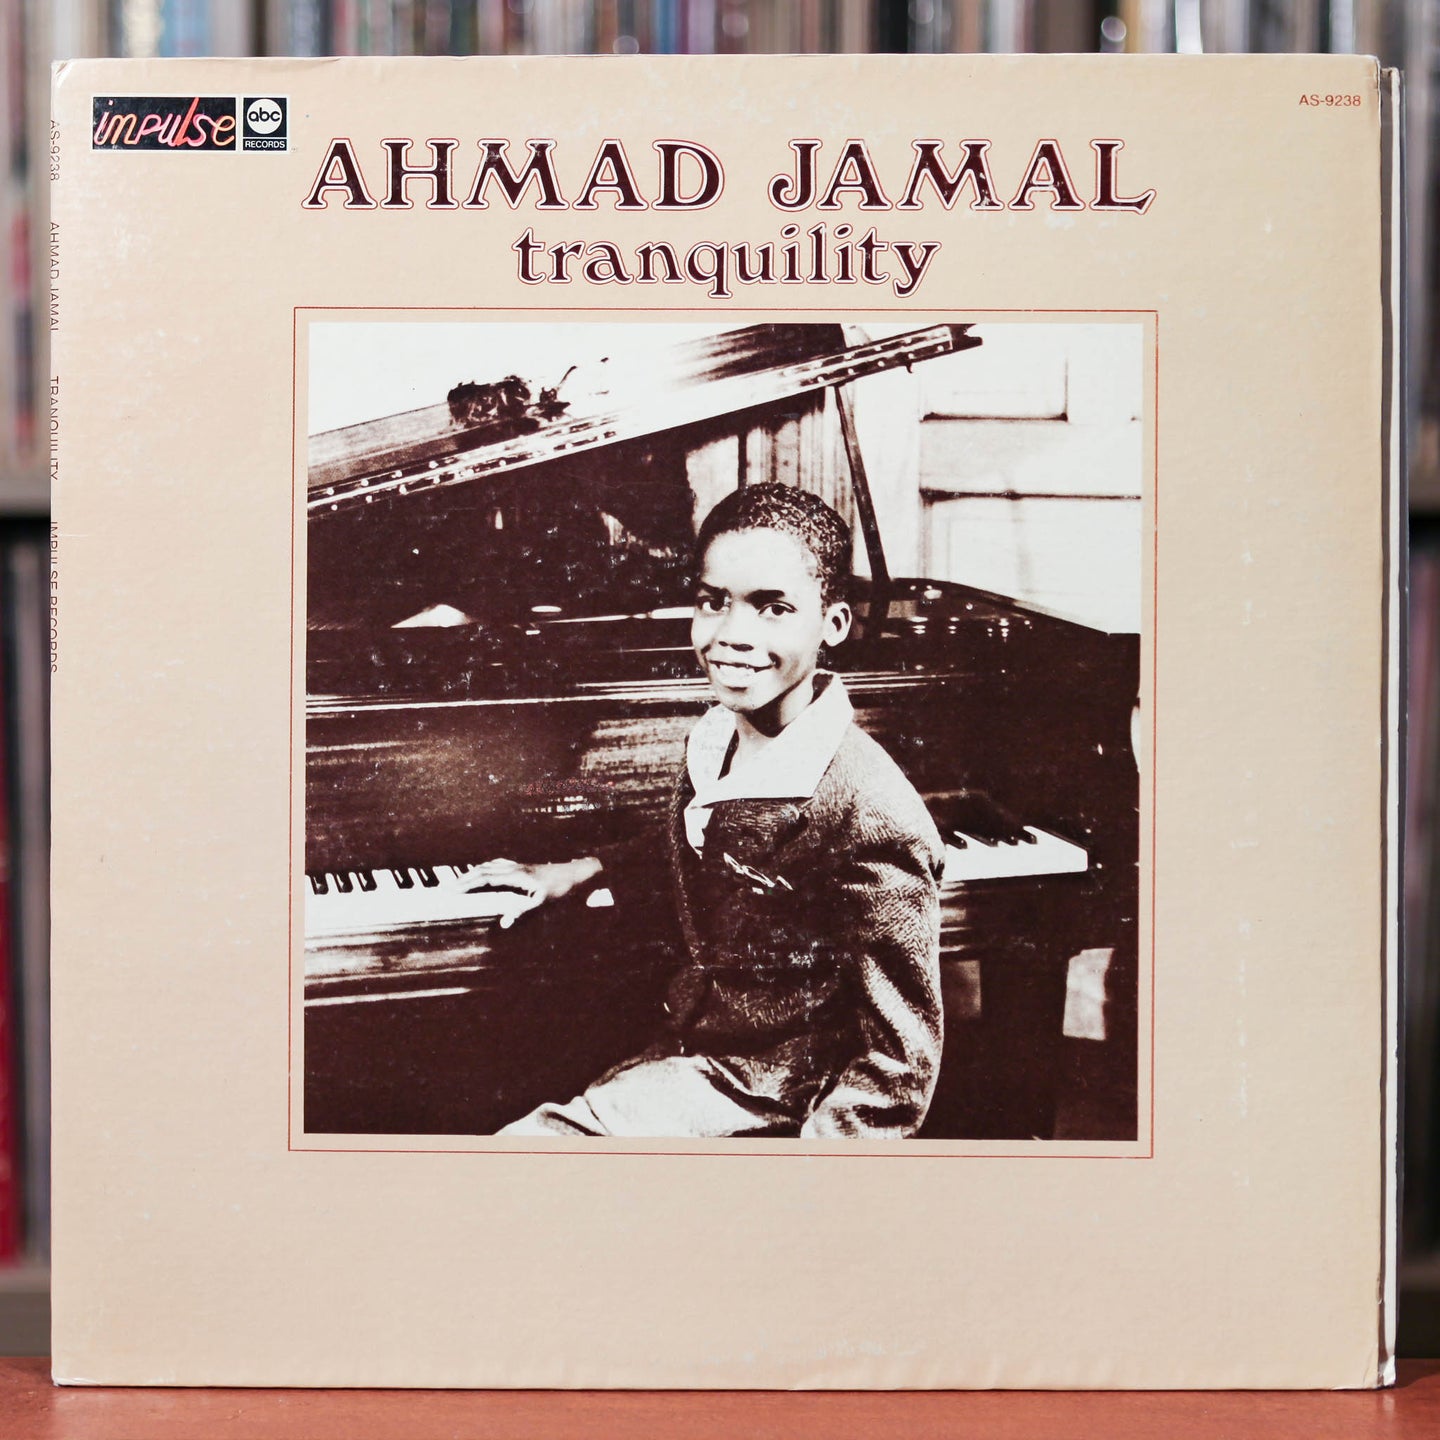 Ahmad Jamal - Tranquility - Quadraphonic - 1968 Impulse, VG++/VG+